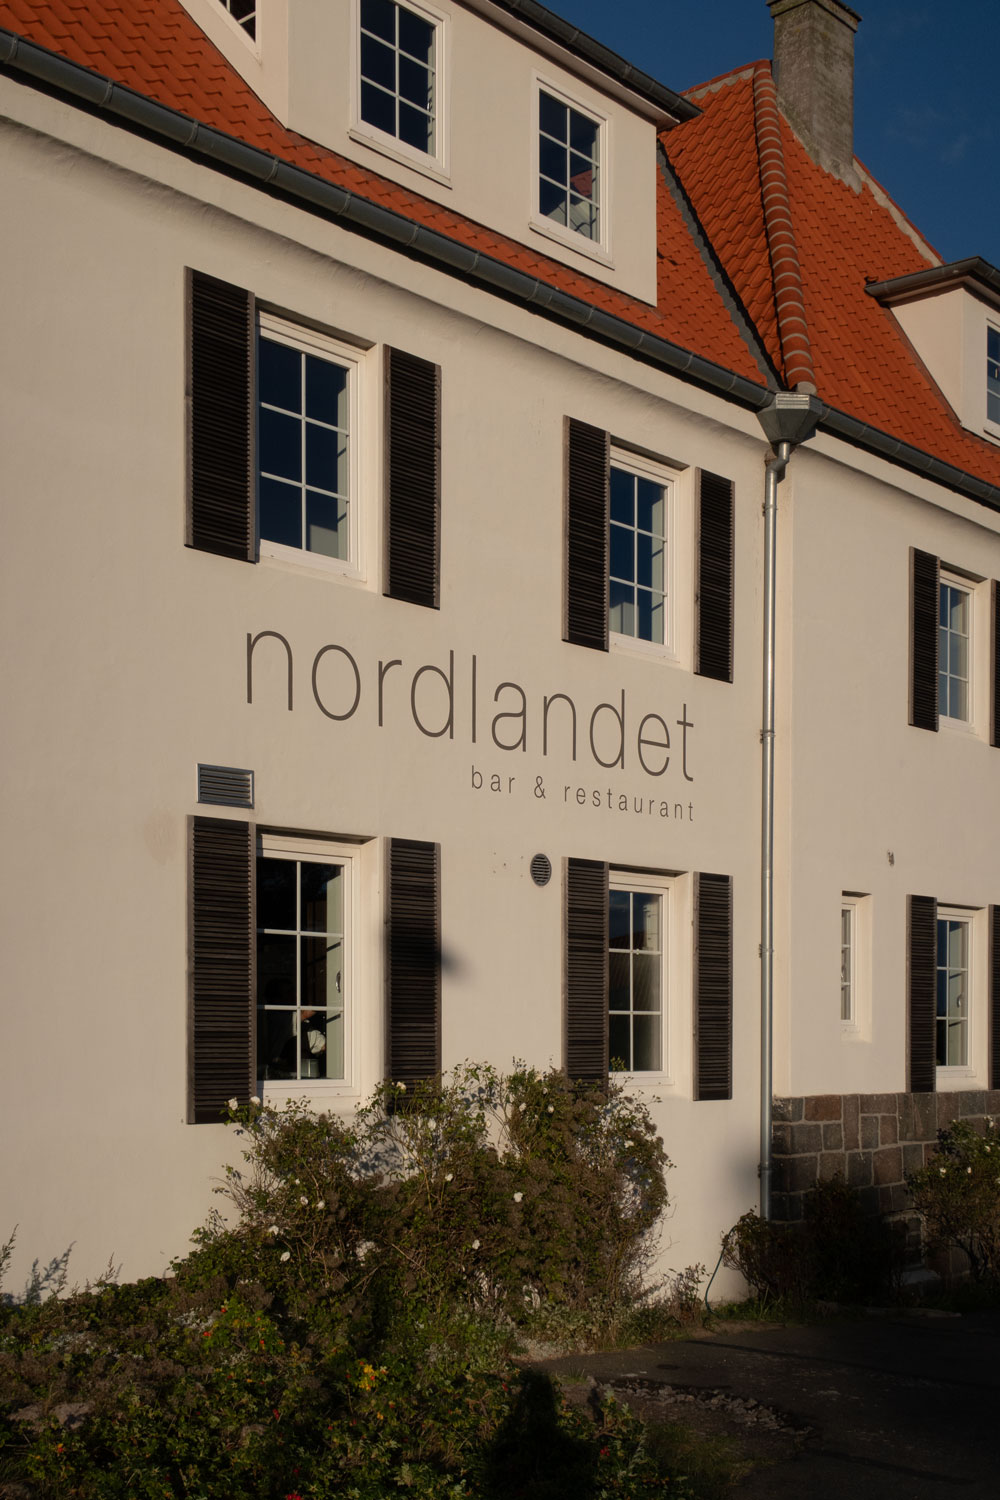 Nordlandet Allinge Bornholm Denmark hotel stay